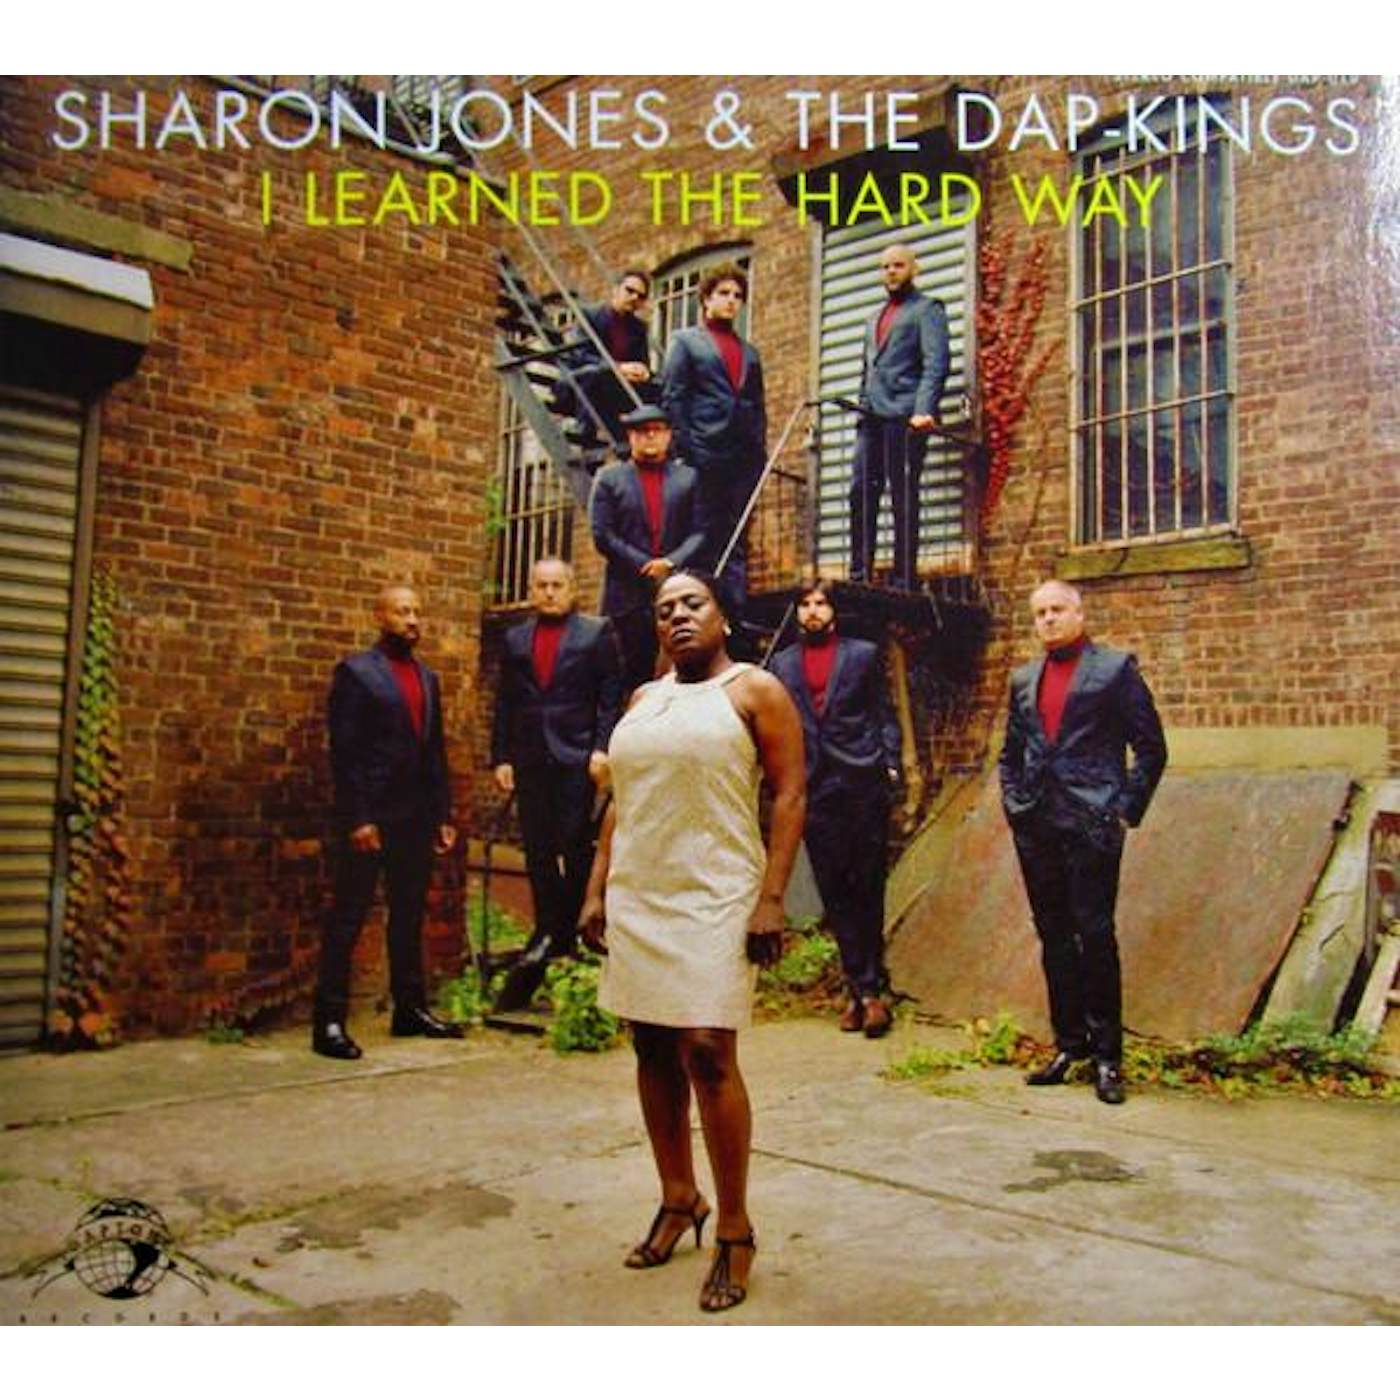 Sharon Jones & The Dap-Kings I LEARNED THE HARD WAY CD